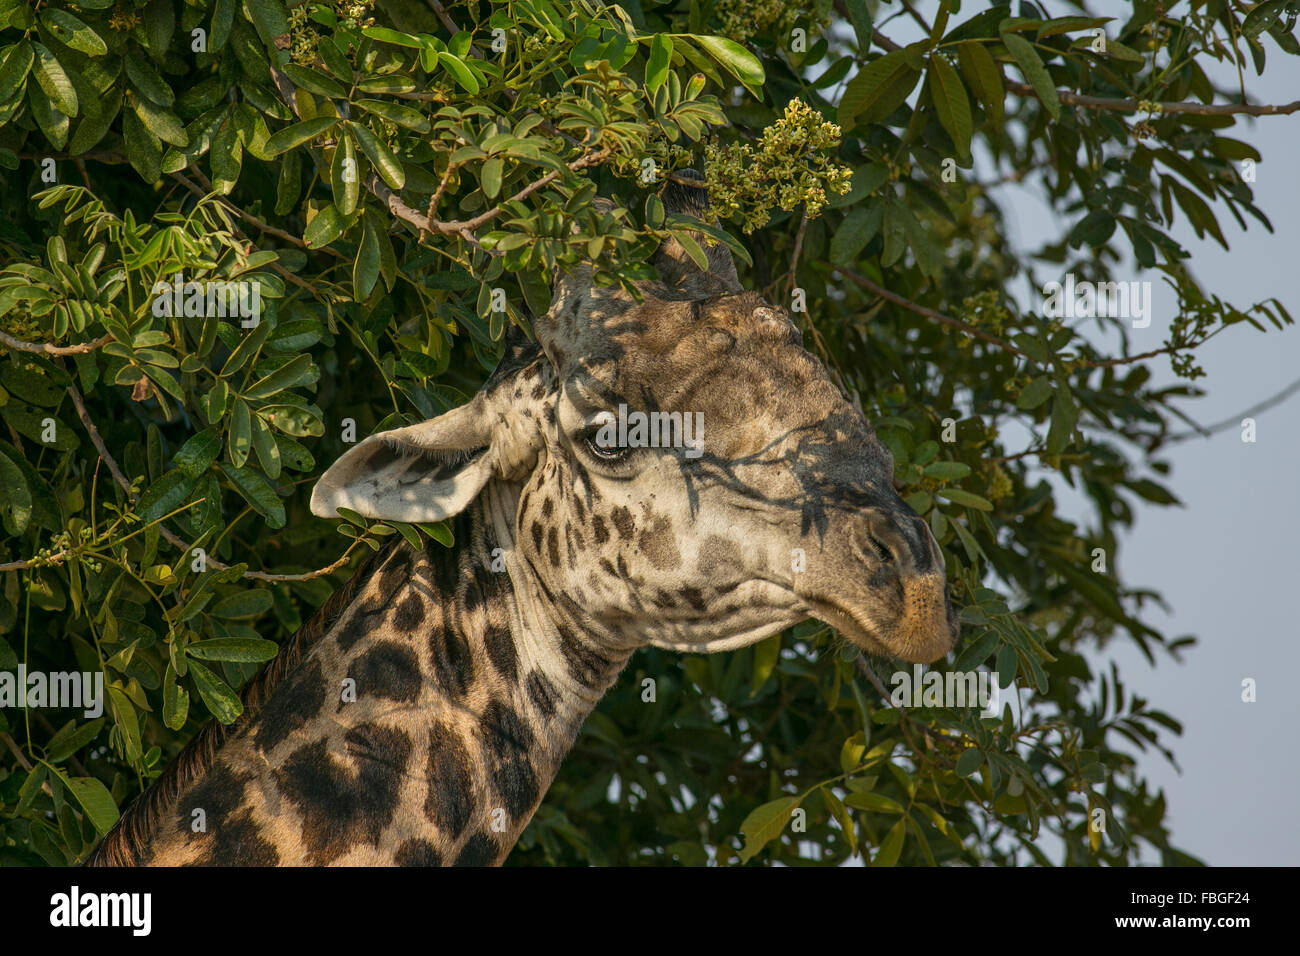 A close up view of a Rhodesian or Thornicroft's giraffe (Giraffa camelopardalis thornicrofti), South Luangwa, Zambia, Africa Stock Photo